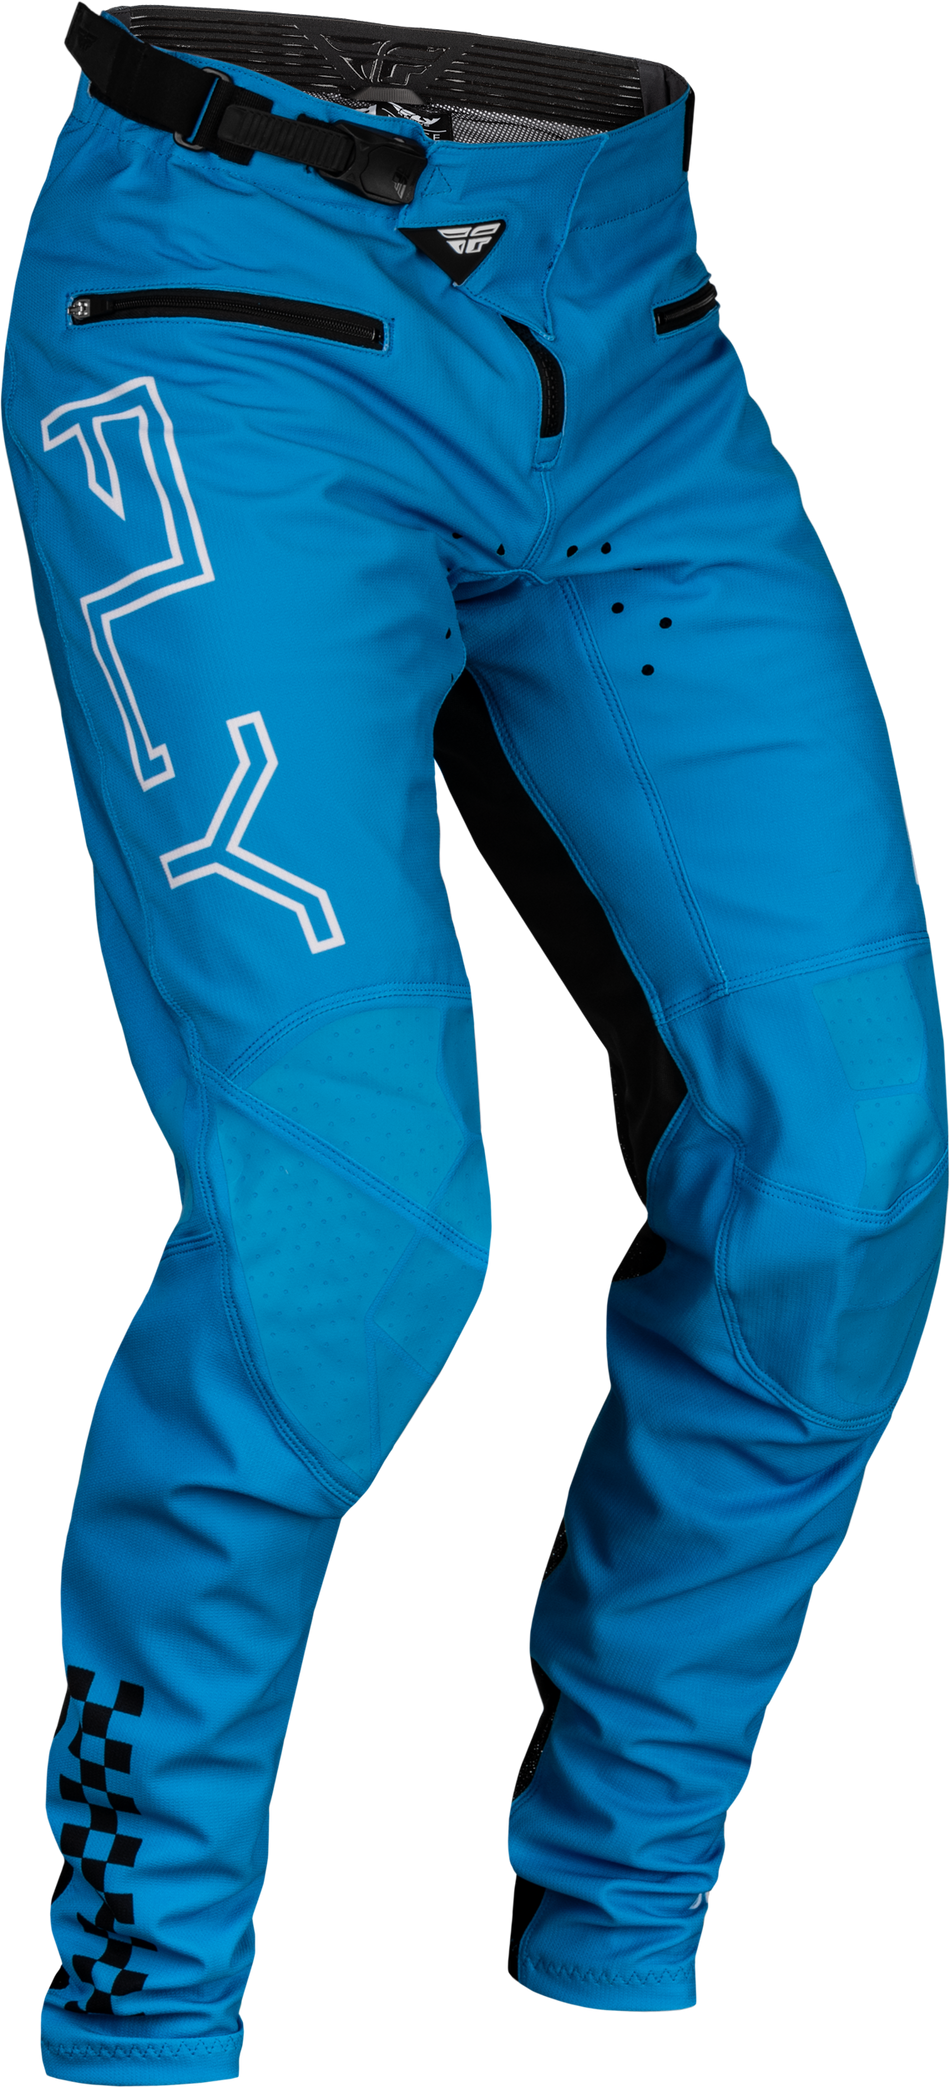 FLY RACING Rayce Bicycle Pants Blue Sz 30 377-06230